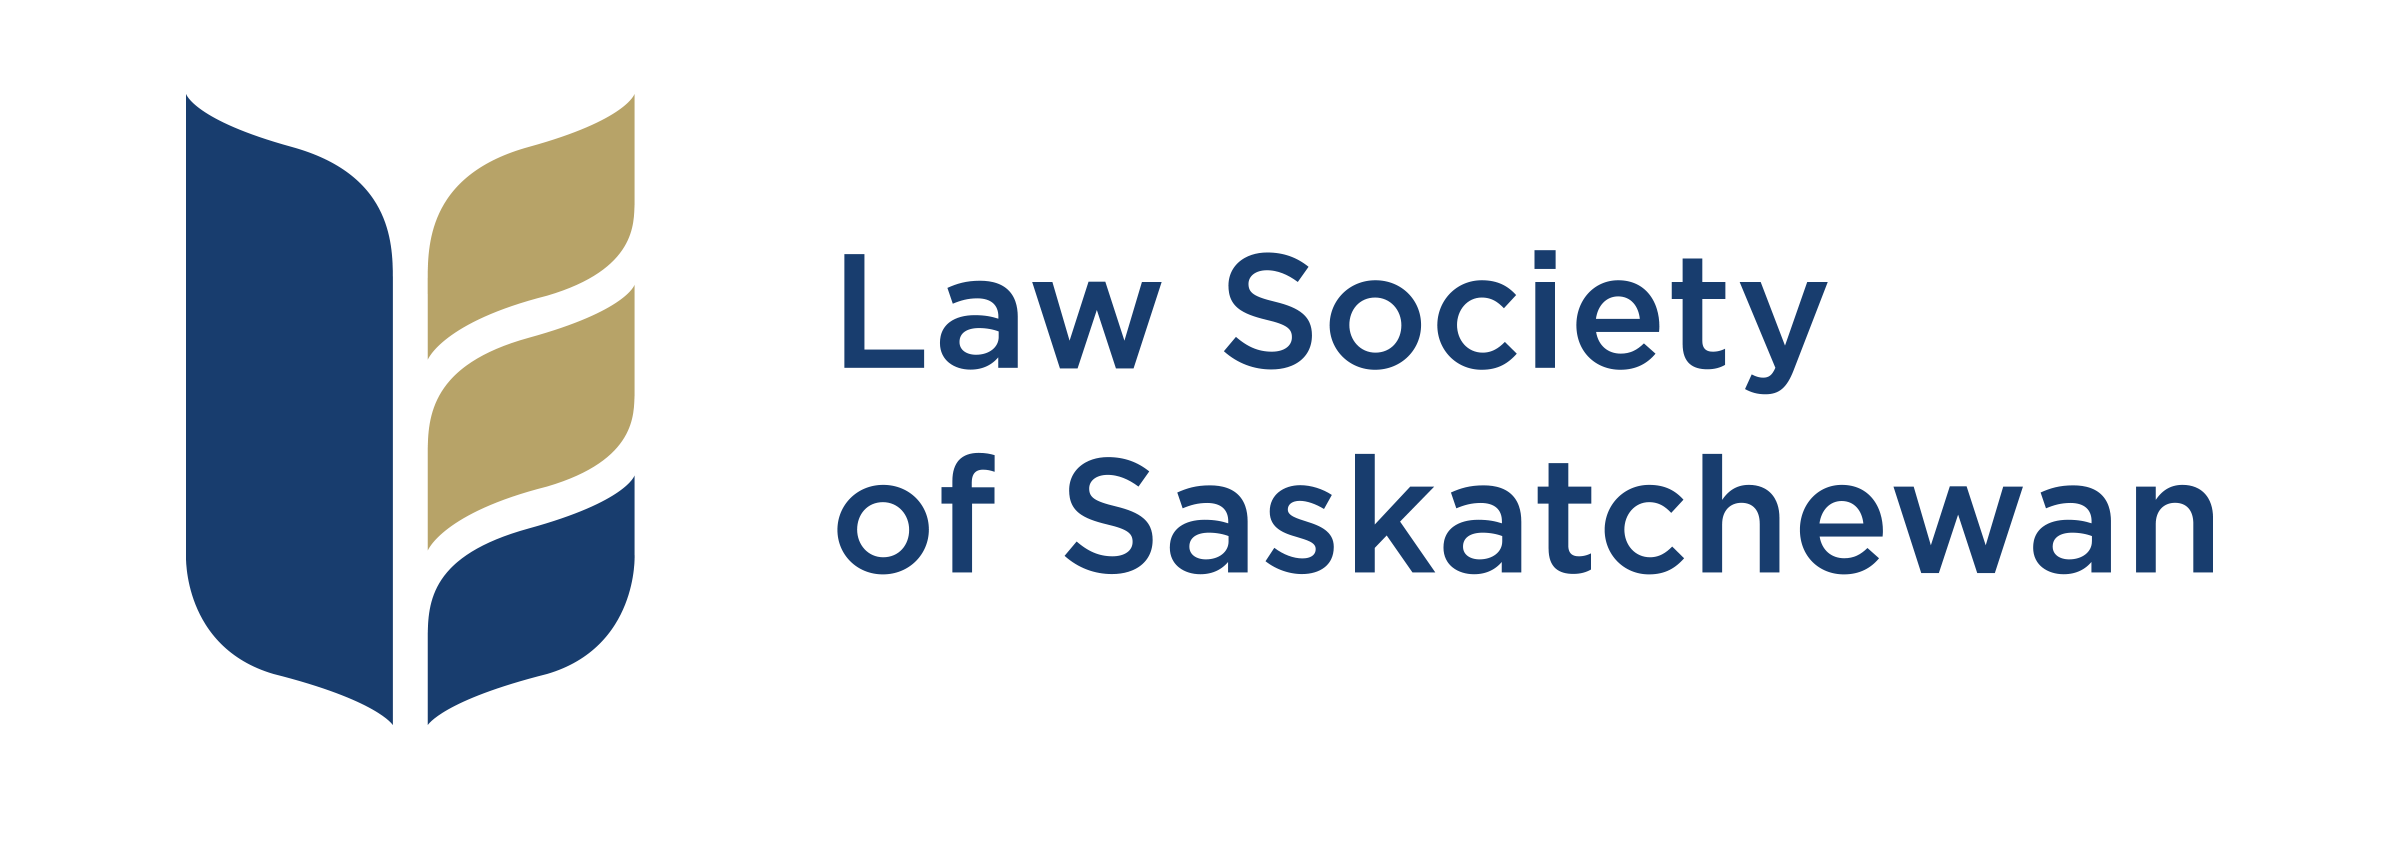 Law Society of Saskatchewan (Copy)